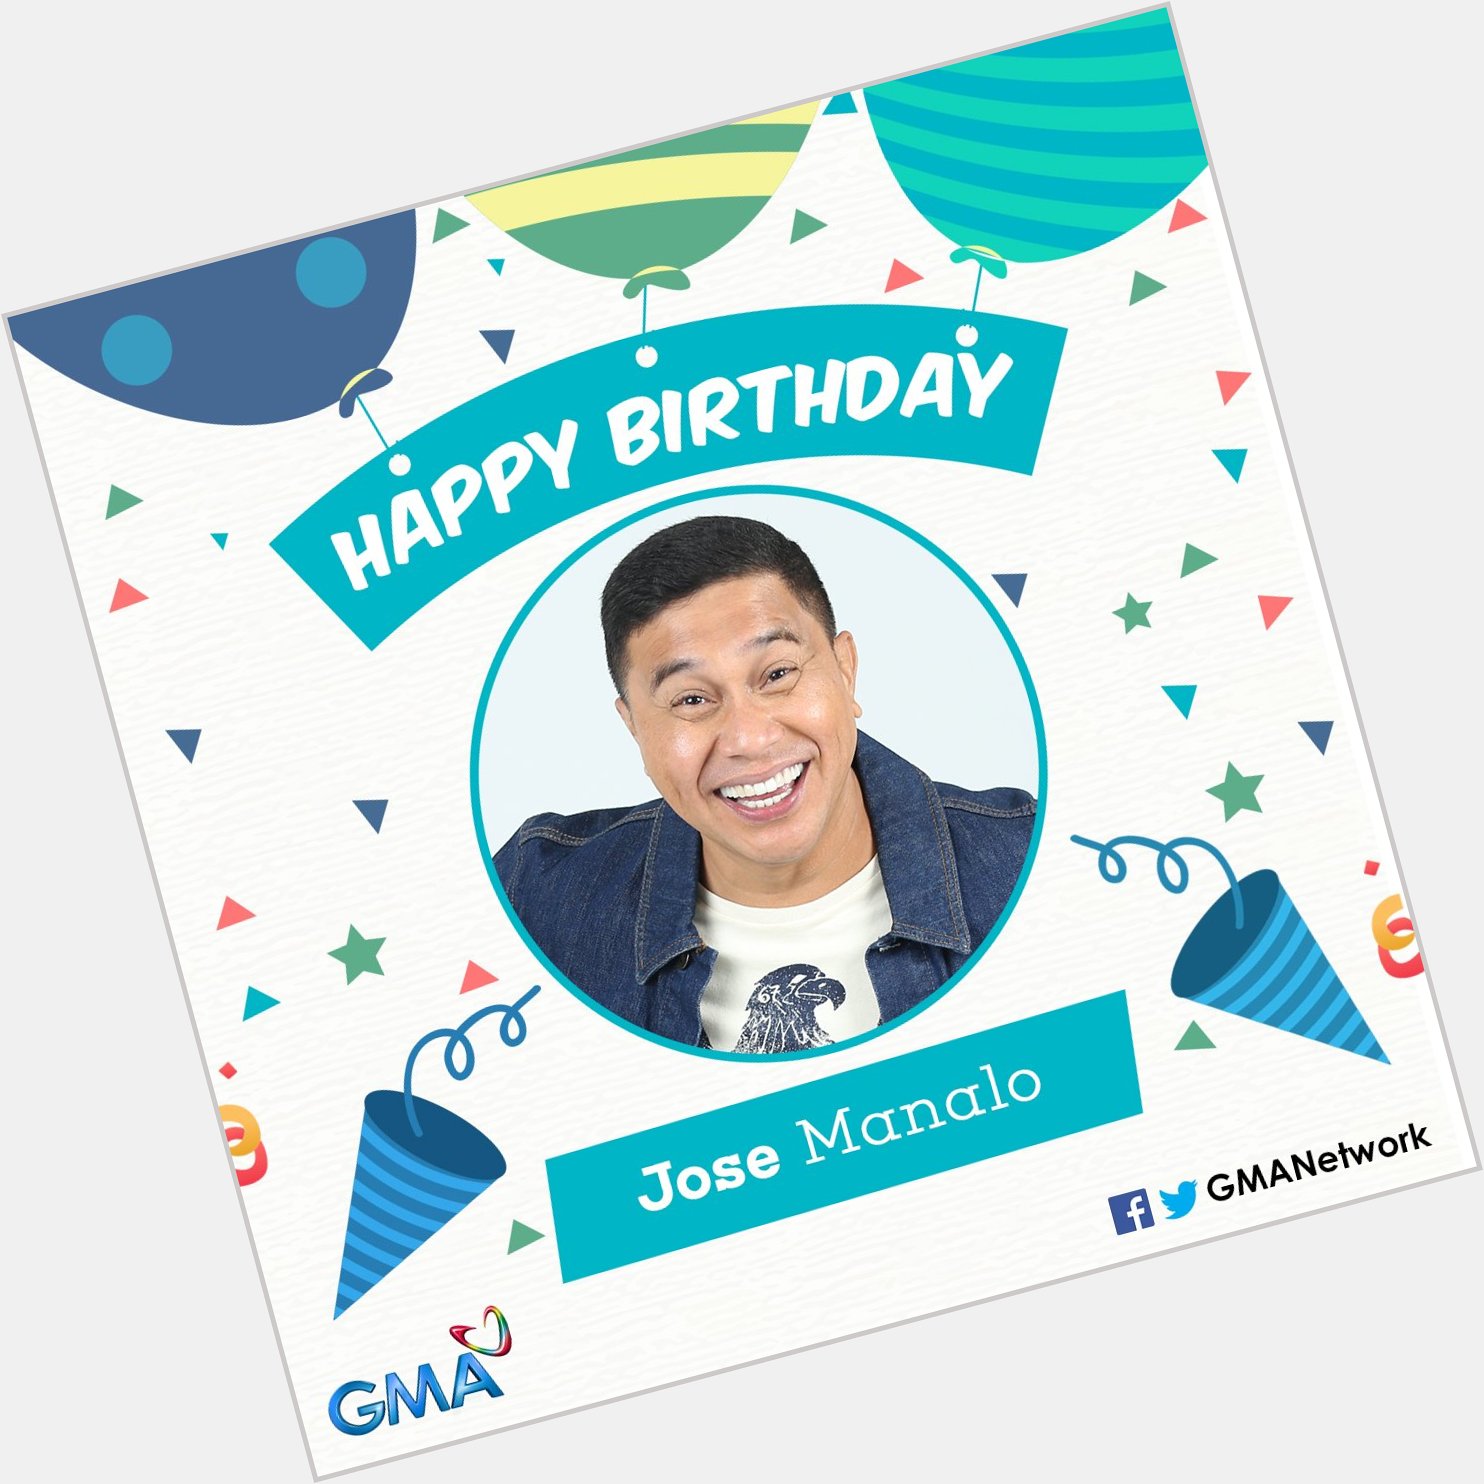 (c) JoWaPao_: Happy birthday to one of GMA\s prized comedians, Jose Manalo! JoseManaIo 